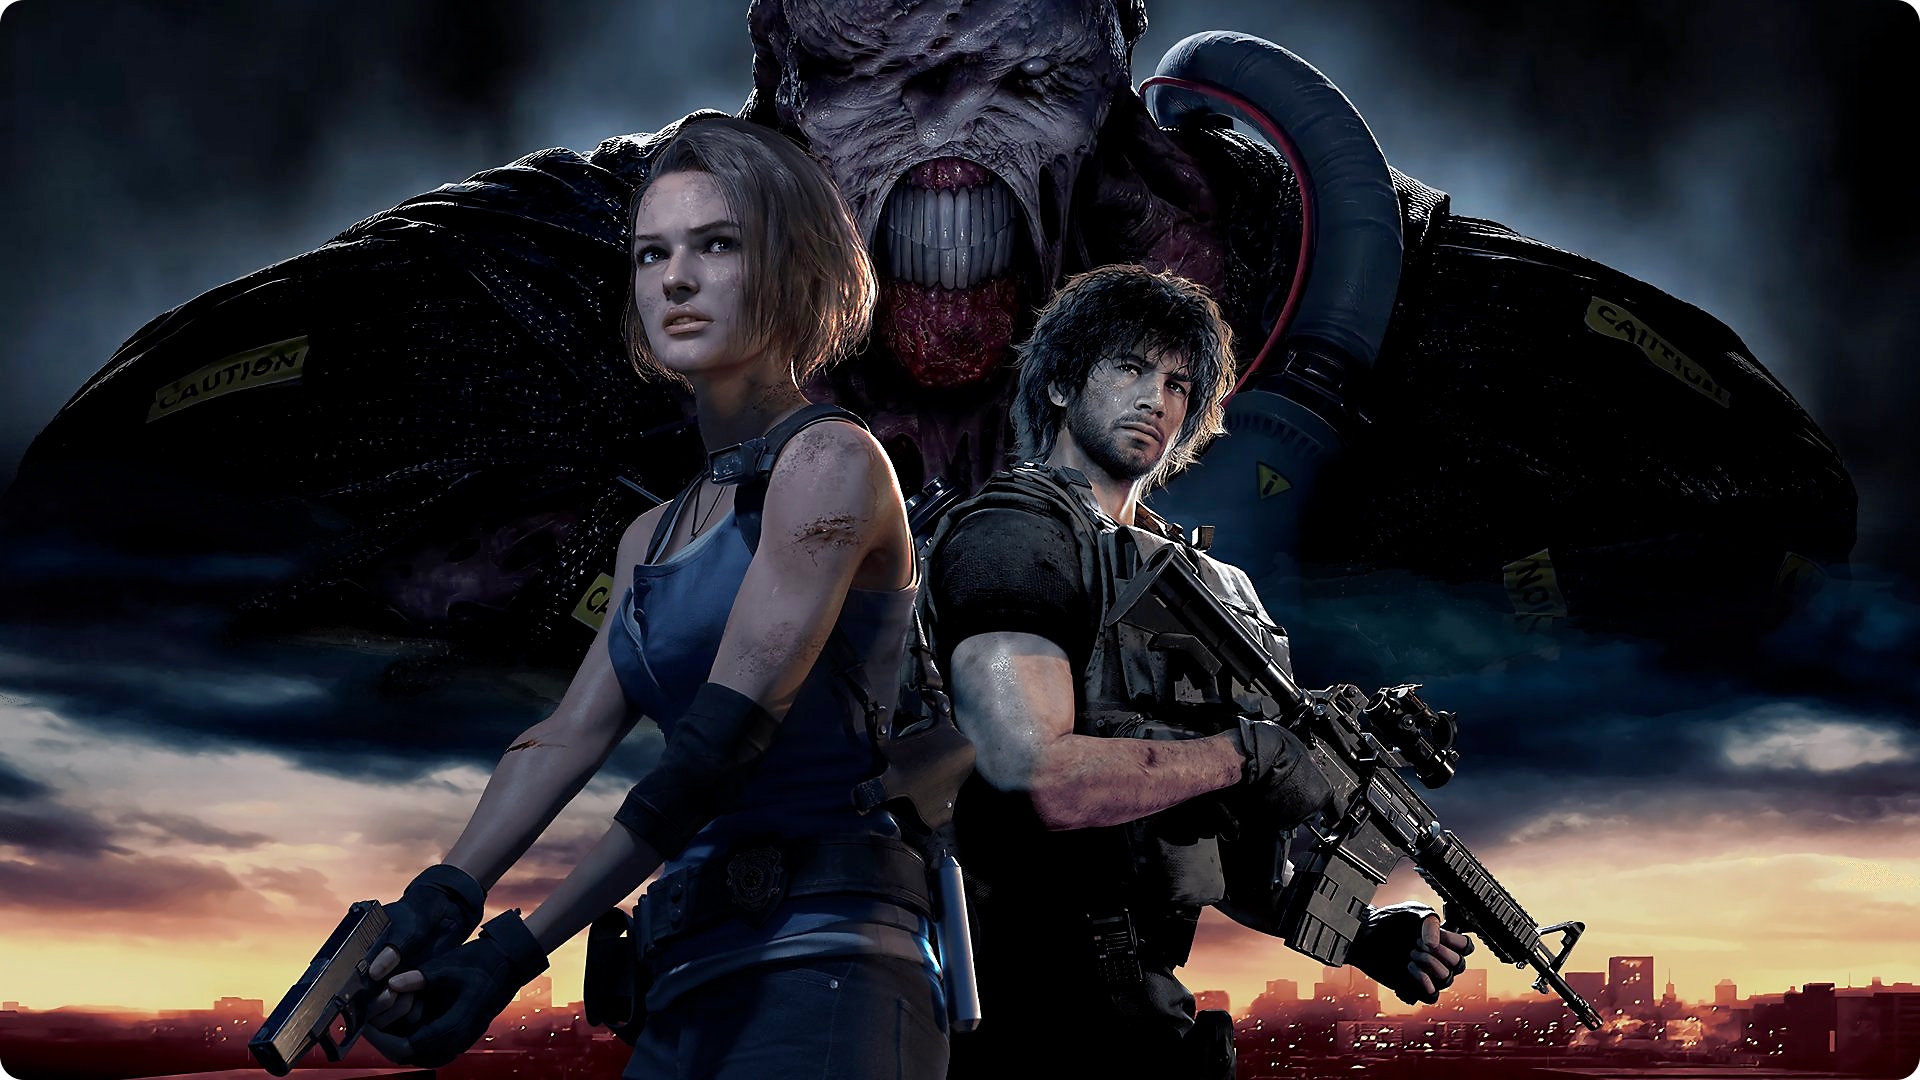 Resident Evil 3 - אומנות עיקרית המציגה את הדמויות הראשיות, ג'יל וקרלוס בחזית, ונמסיס האנטגוניסט הראשי ברקע. 